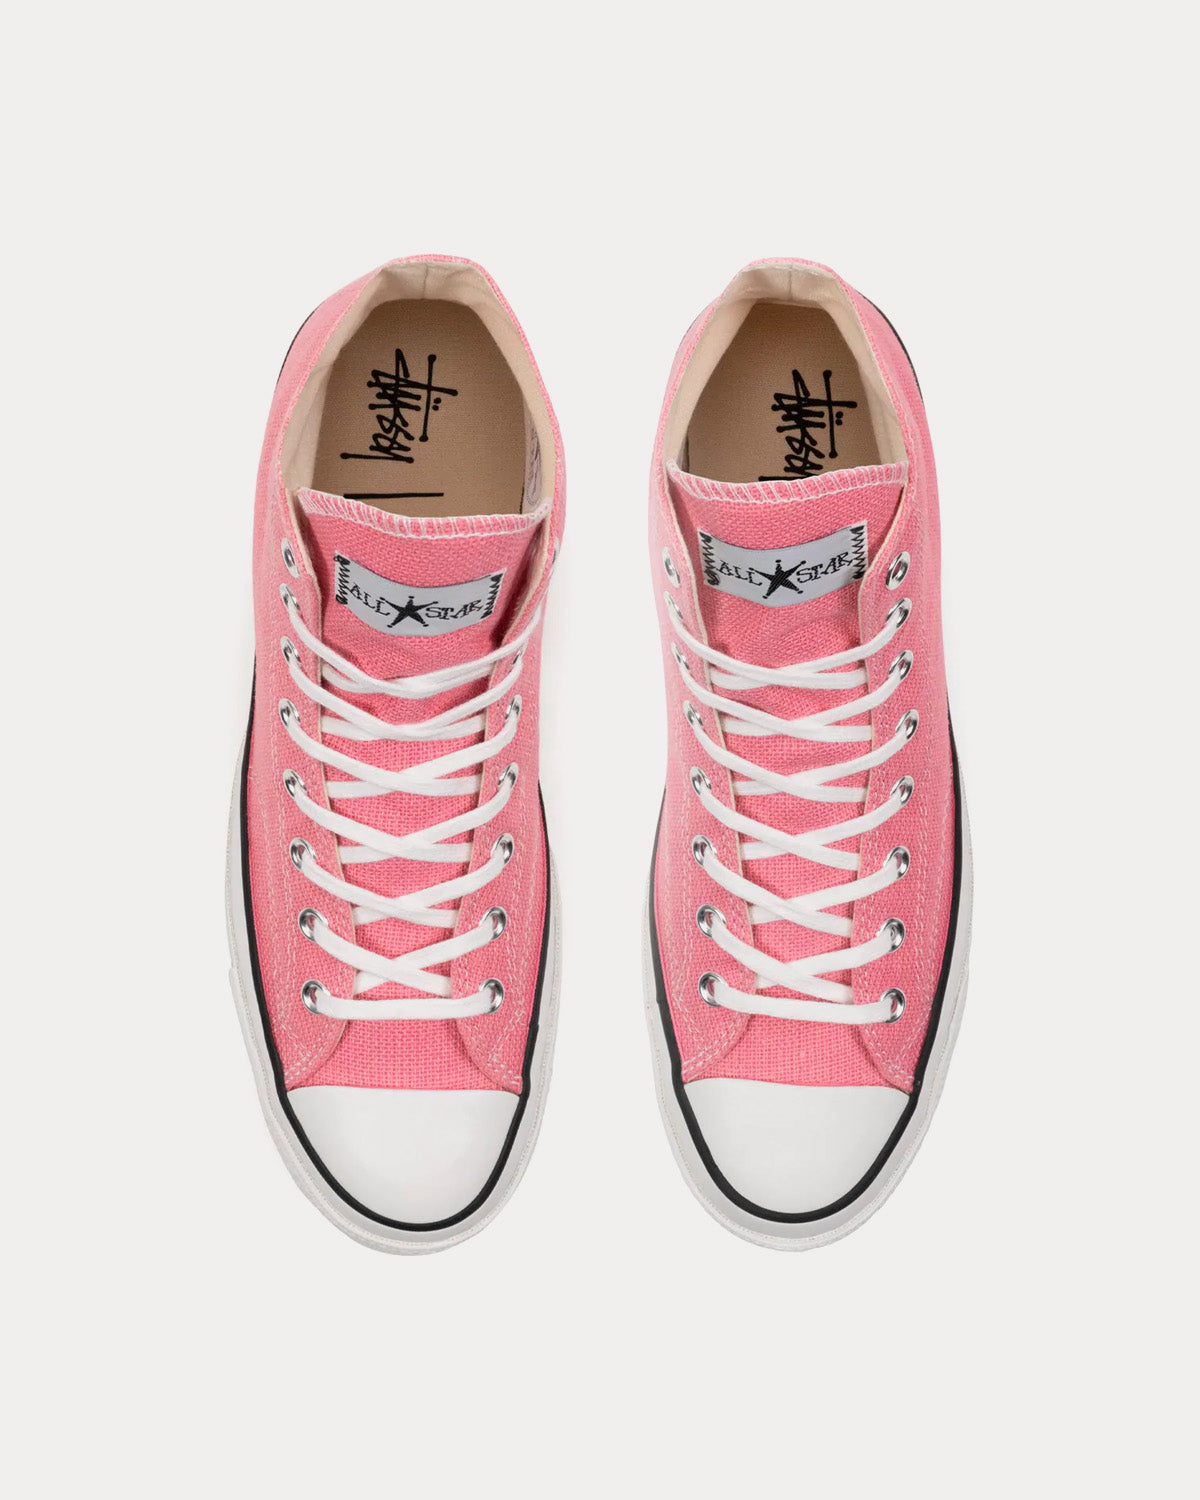 Converse x Stüssy - Chuck 70 Hi Pink High Top Sneakers